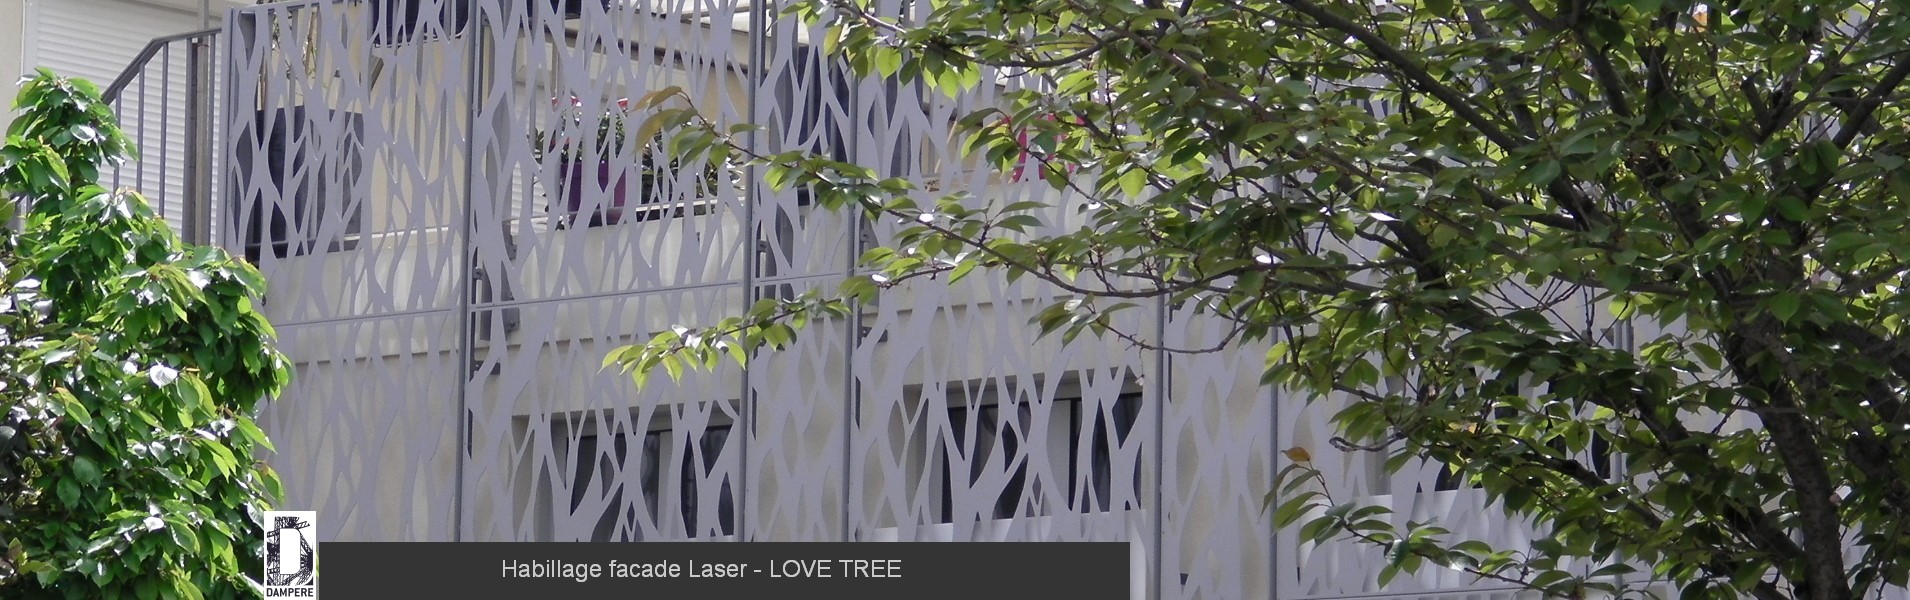 Habillage facade Laser LOVE TREE 4